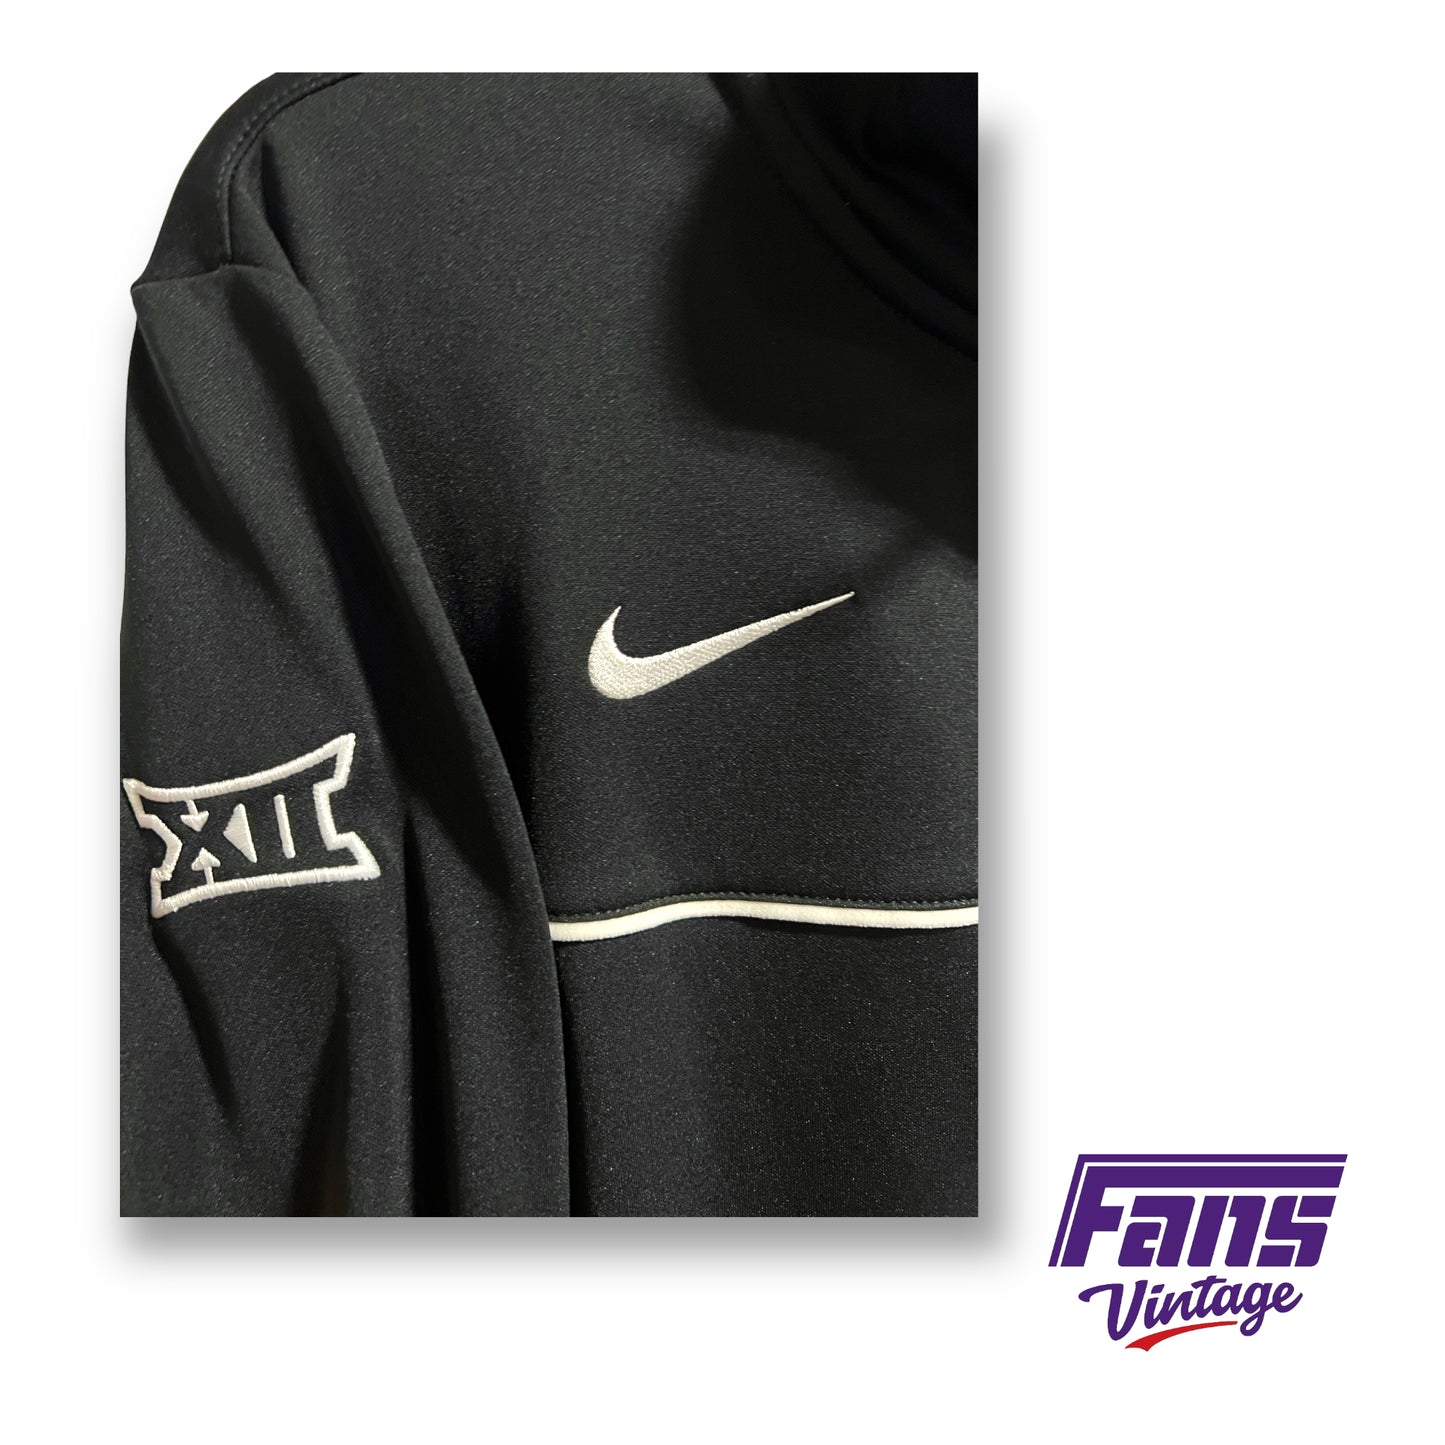 Nike TCU team issued full-zip dri-fit pullover